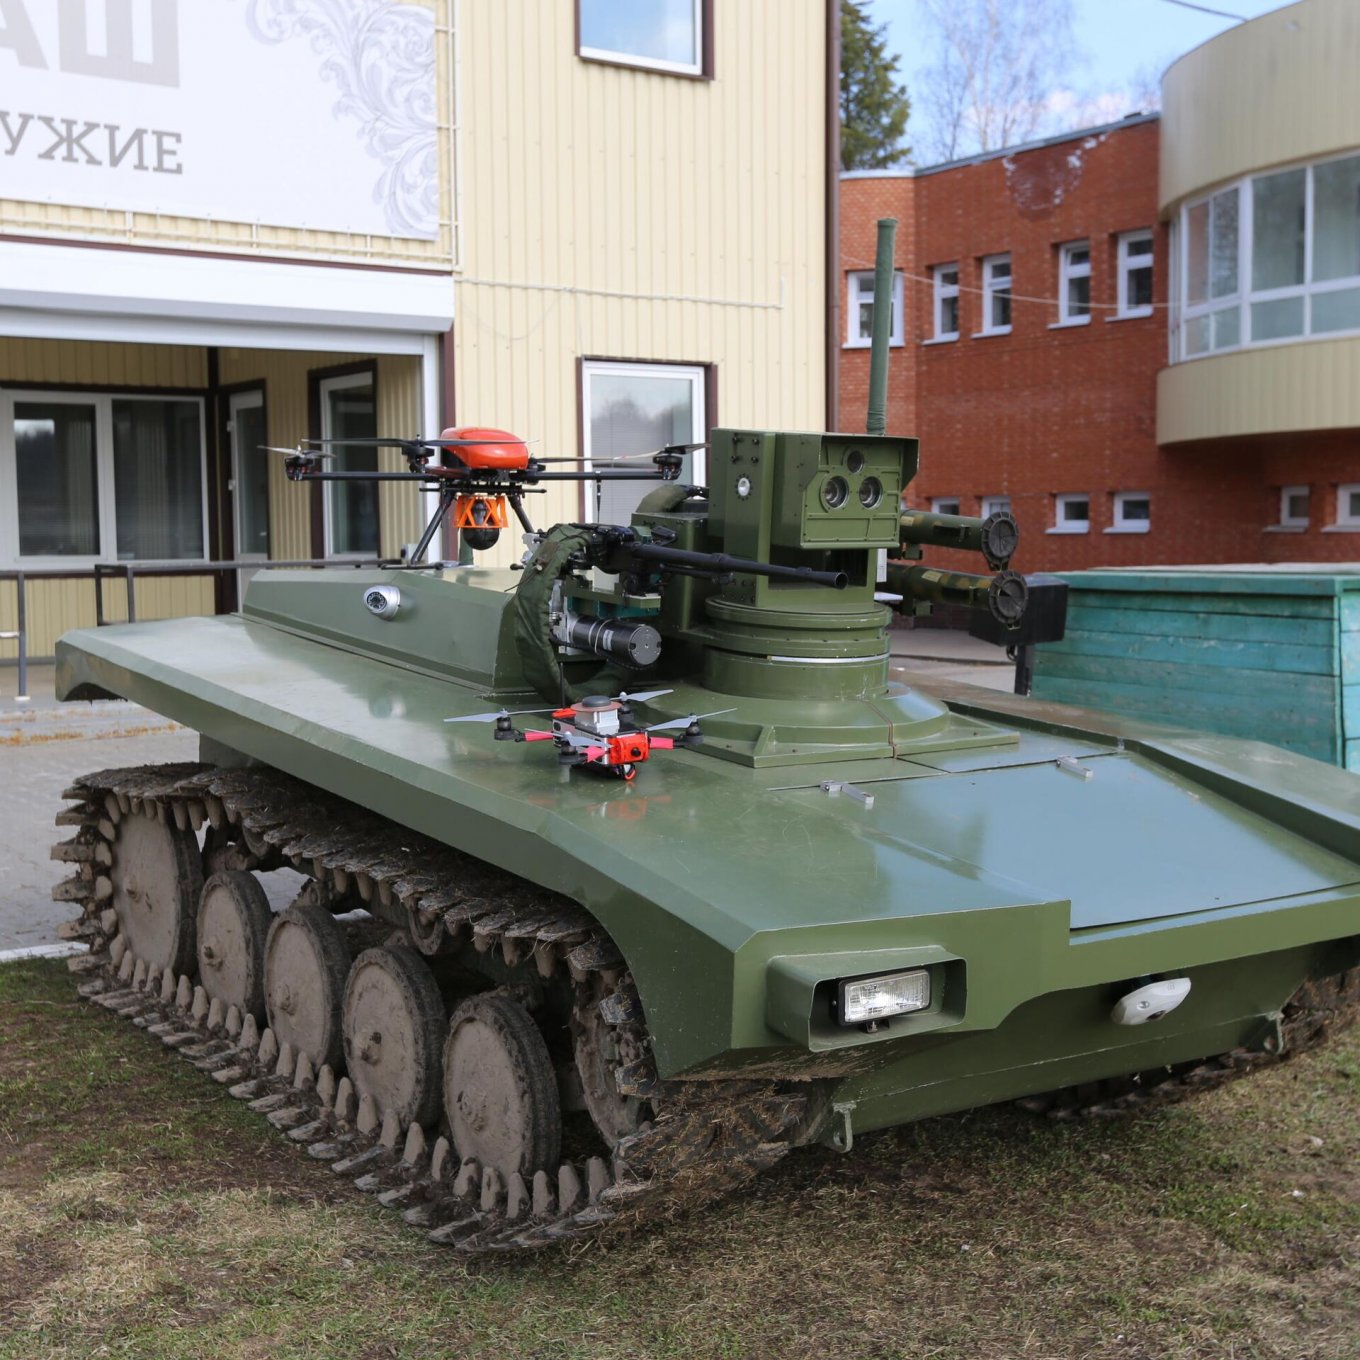 Russian Marker robotic platform Defense Express Ukraine Got Estonian THeMIS UGV by Milrem Robotics, russia Want Get It Declaring Just $16,500 Bounty, Company Commented on Supply